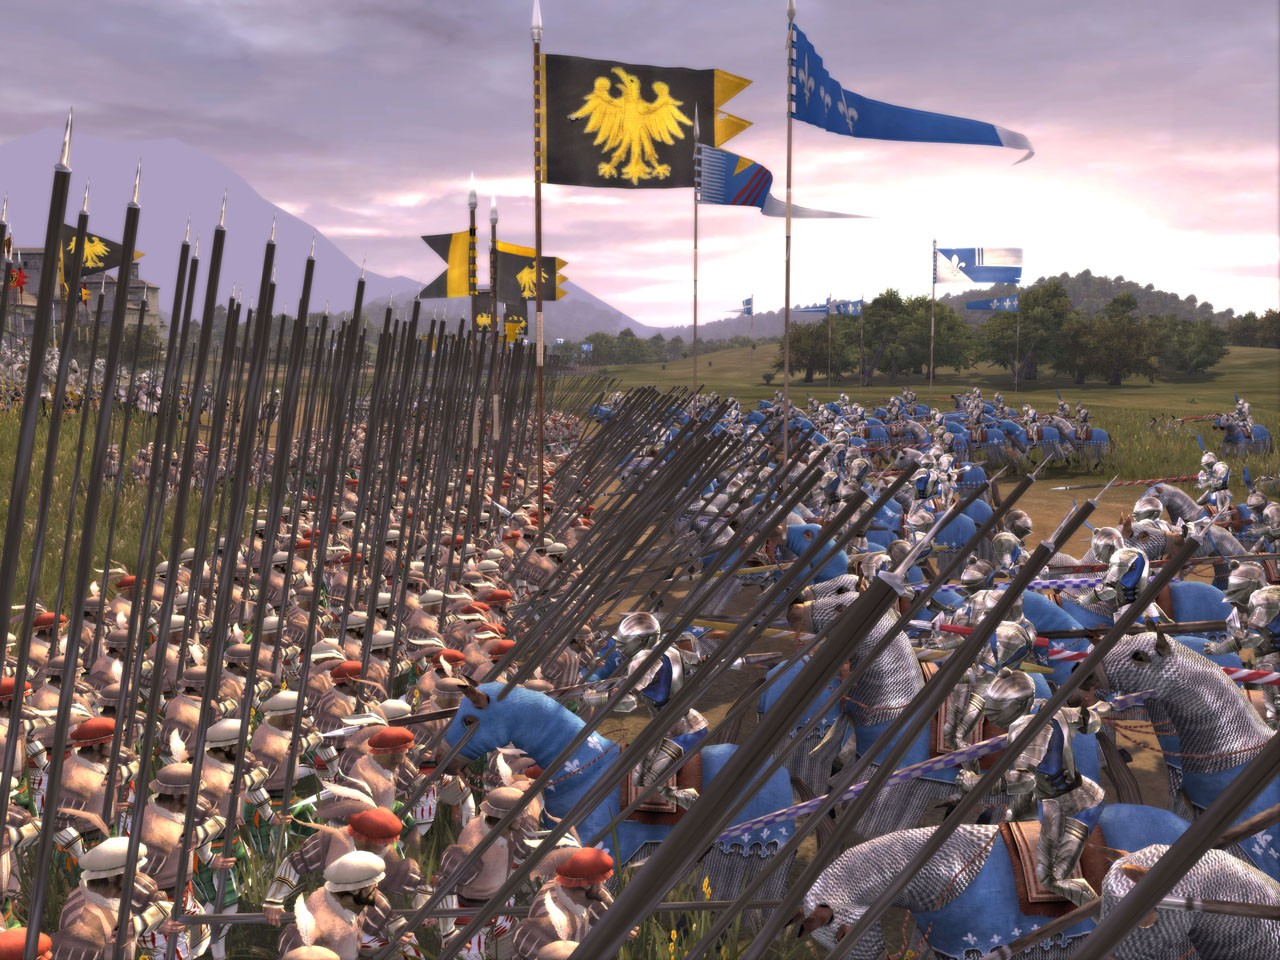 Medieval II: Total War - frissített demó